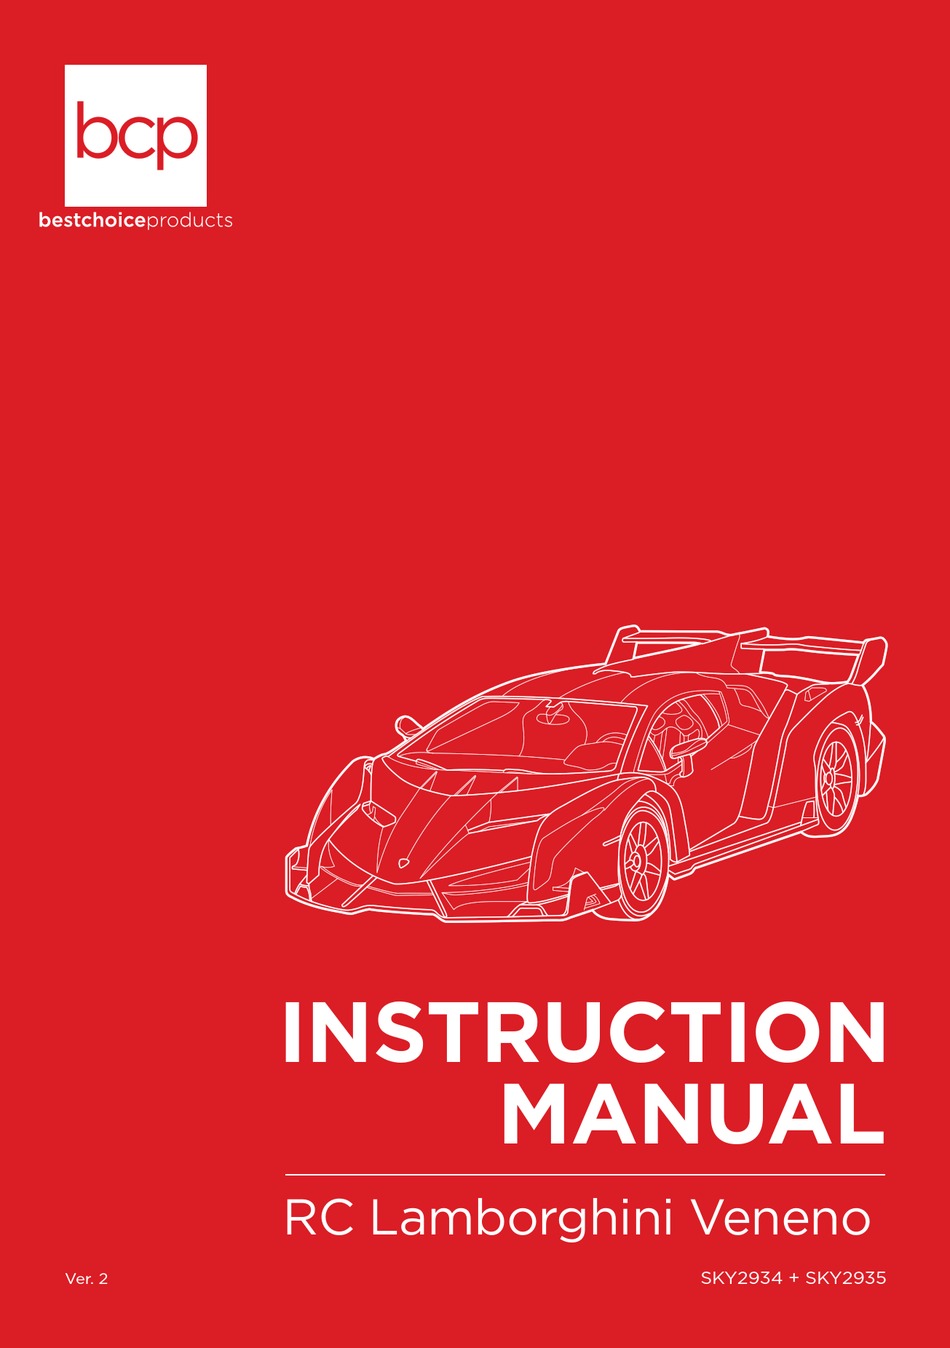 Bcp Rc Lamborghini Veneno Instruction Manual Pdf Download Manualslib - roblox vehicle simulator lamborghini veneno manual